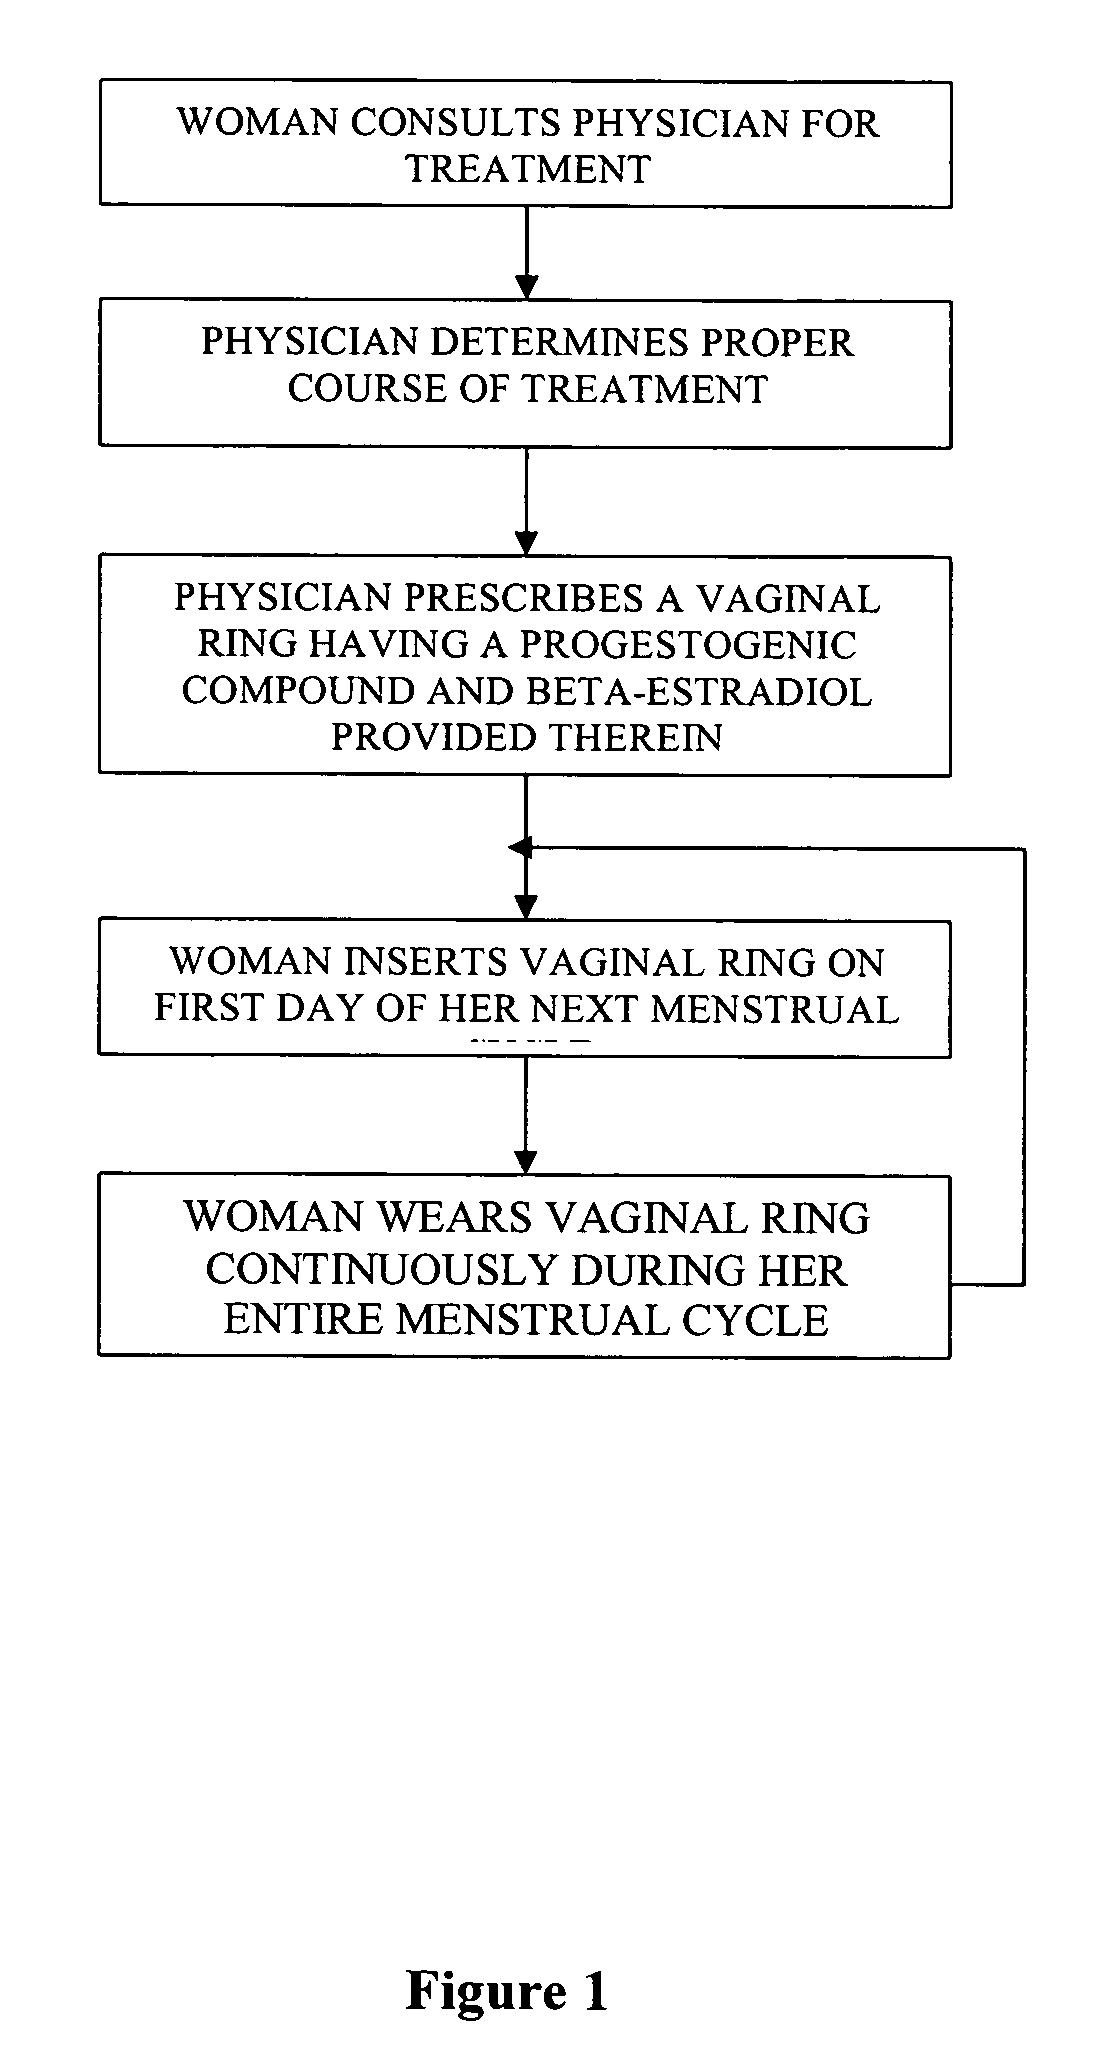 Method of birth control and hormone regulation